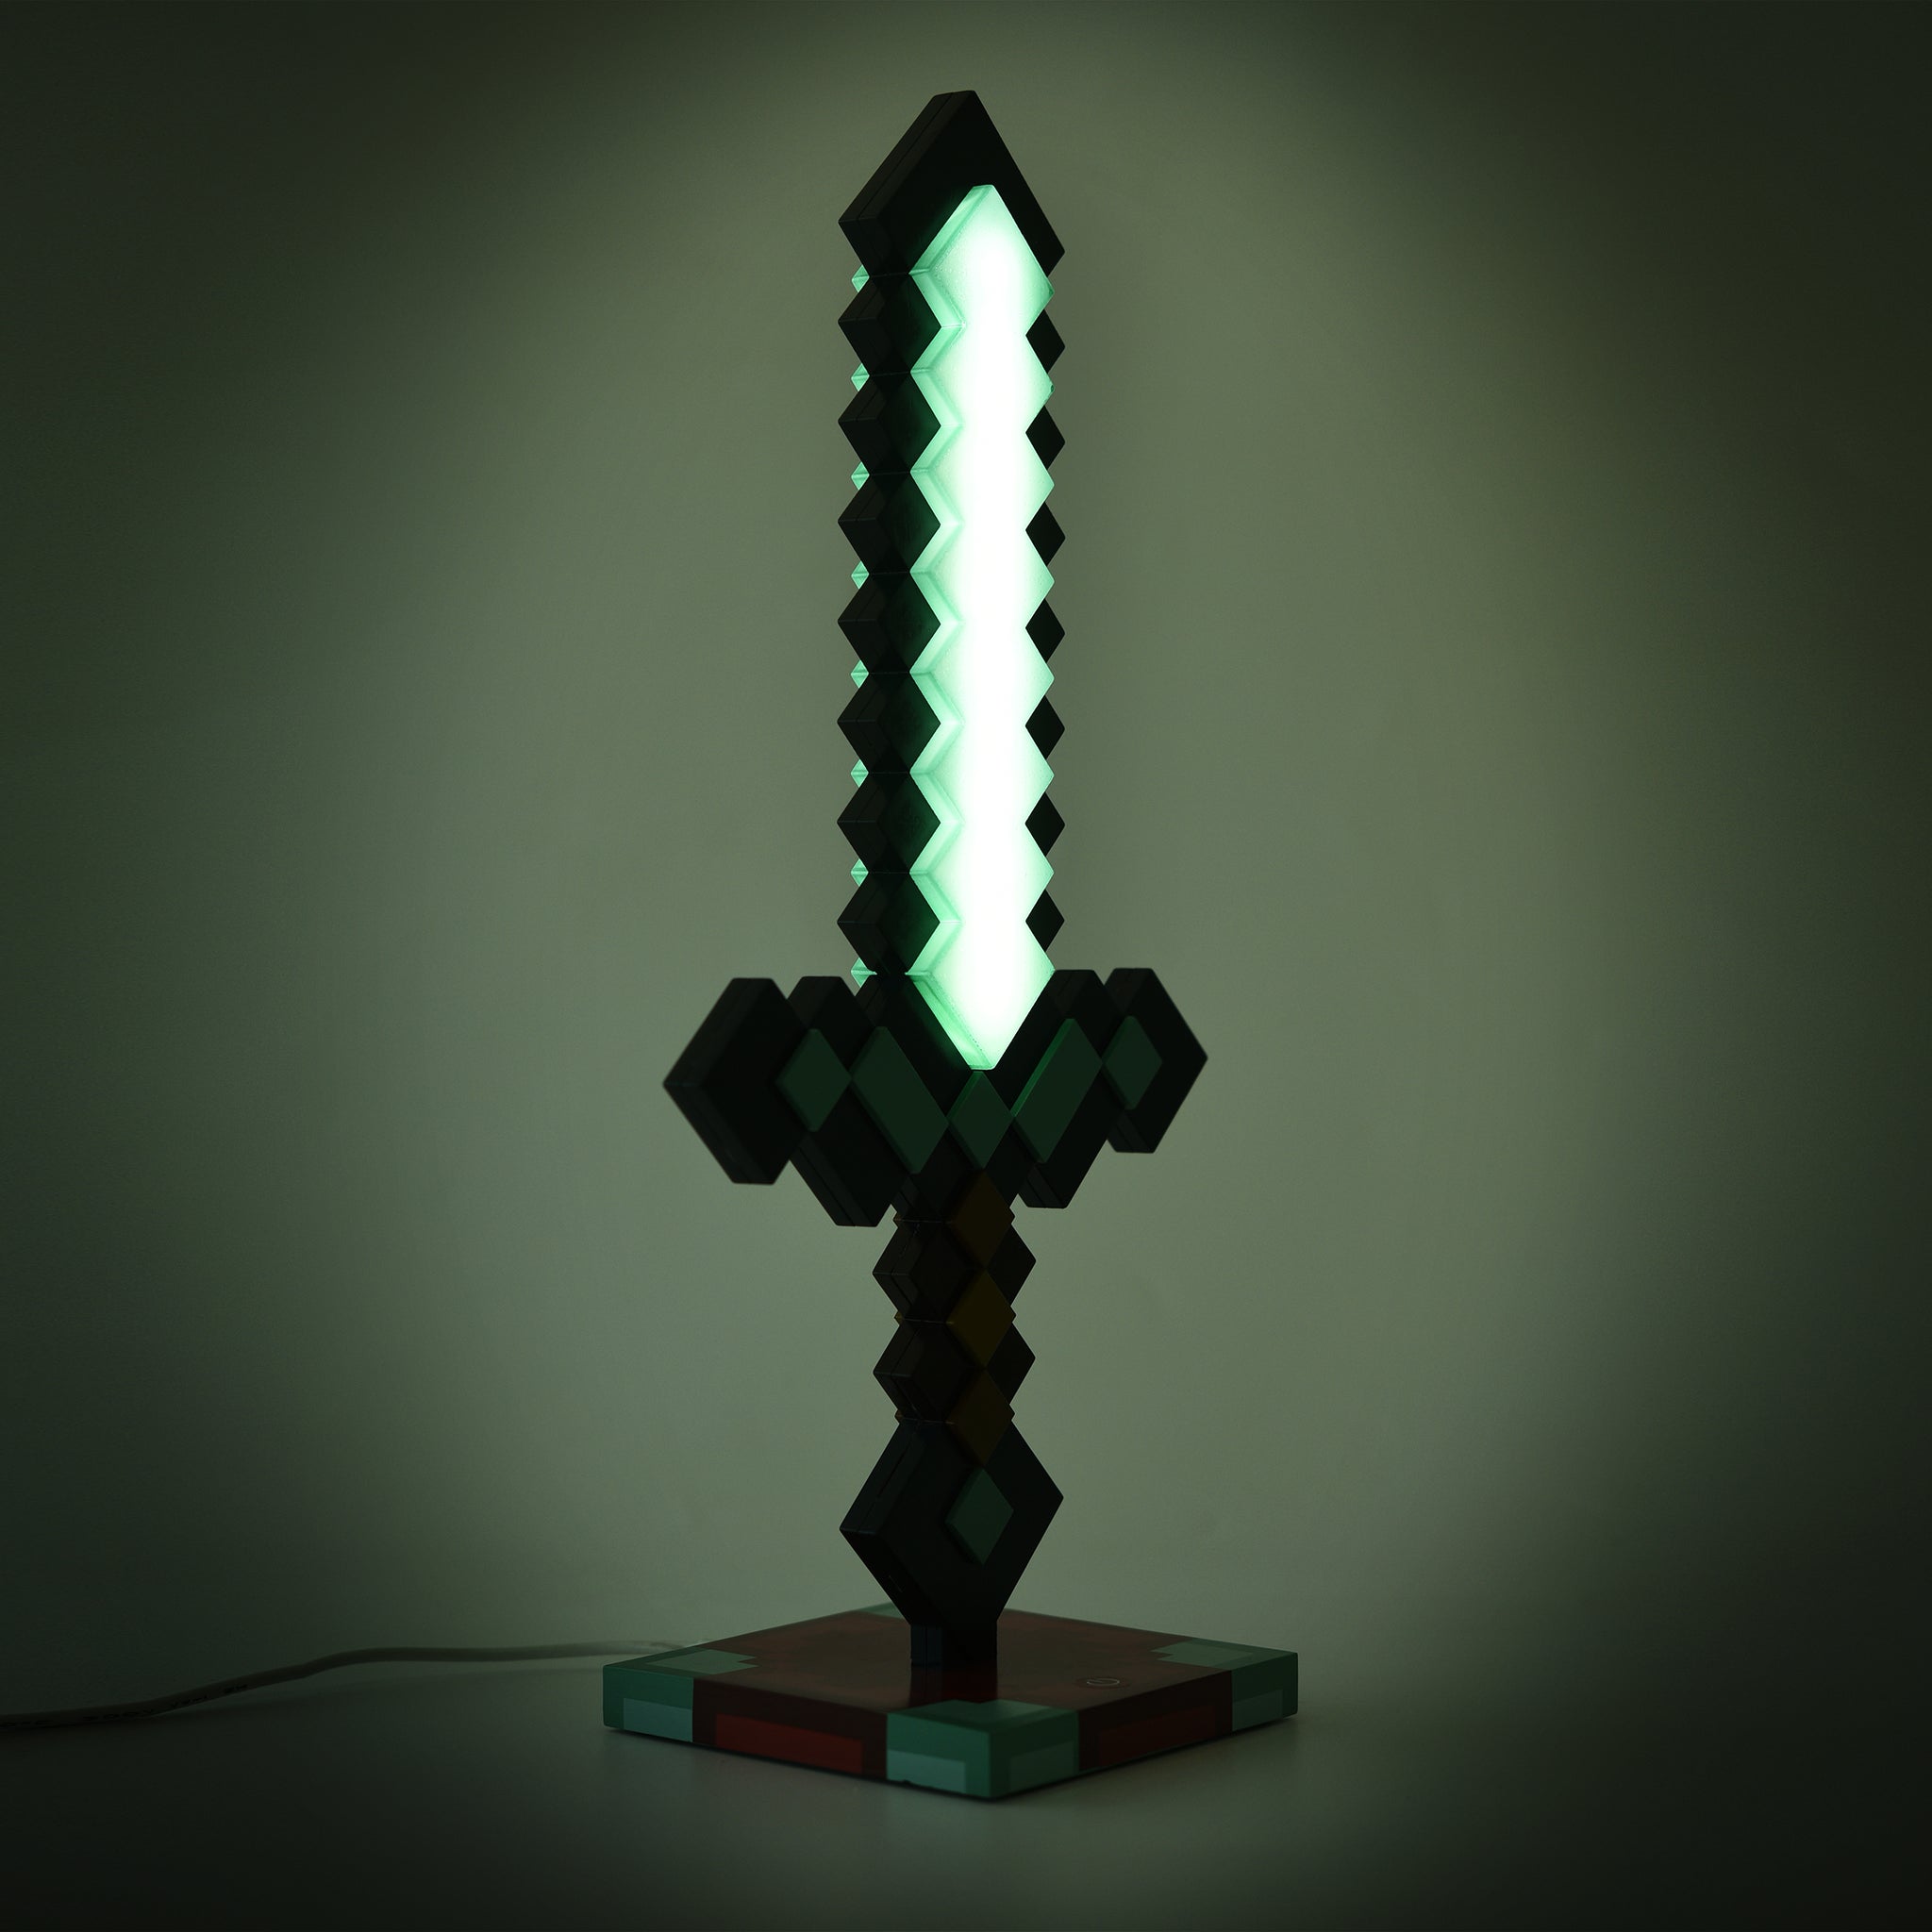 Minecraft 3D Diamond Sword Desk Lamp – Ukonic